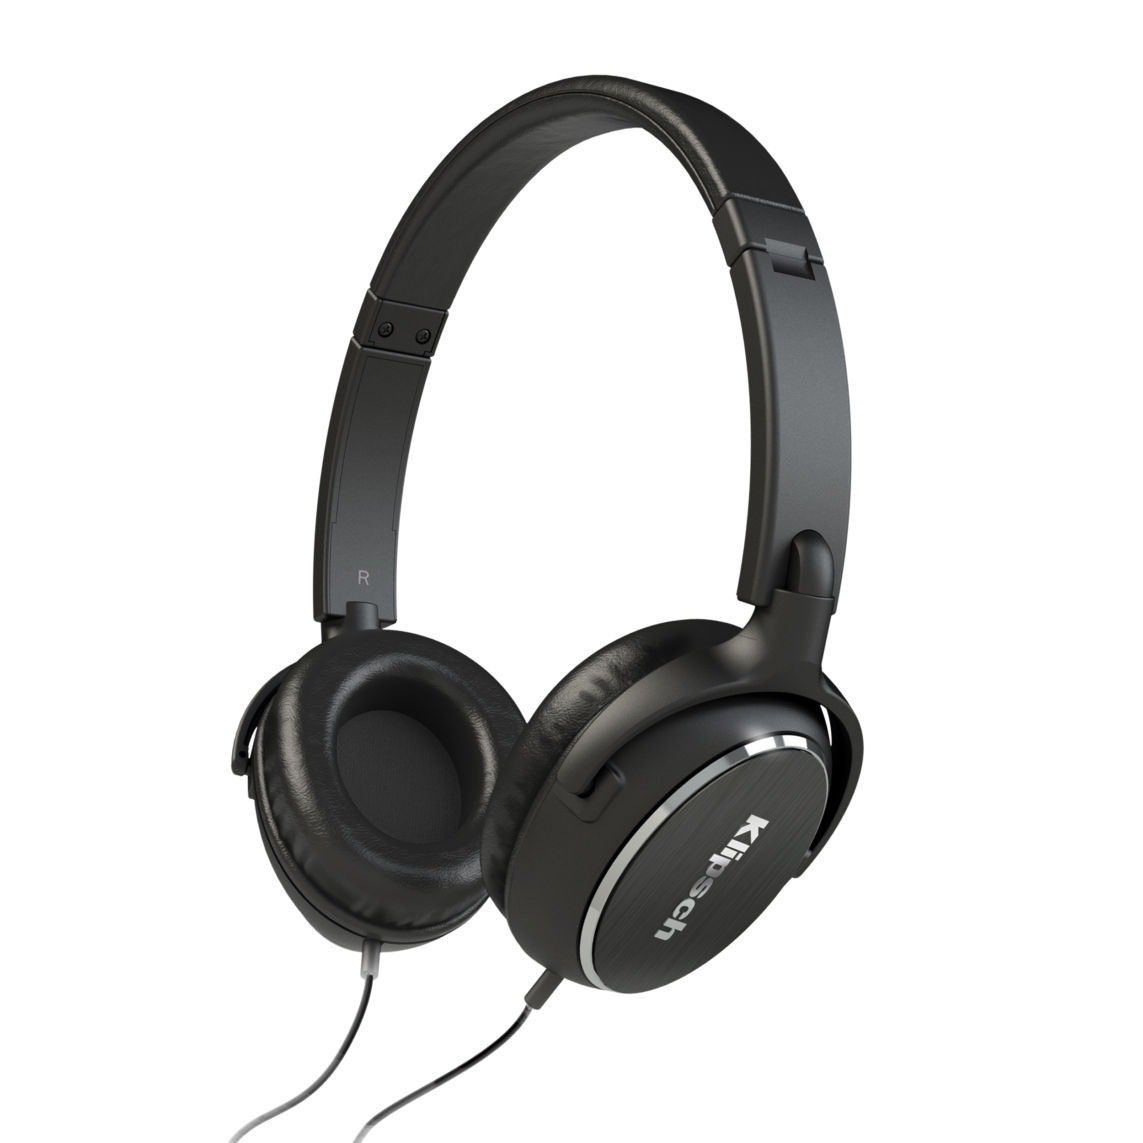 Klipsch R61 one ear headphones